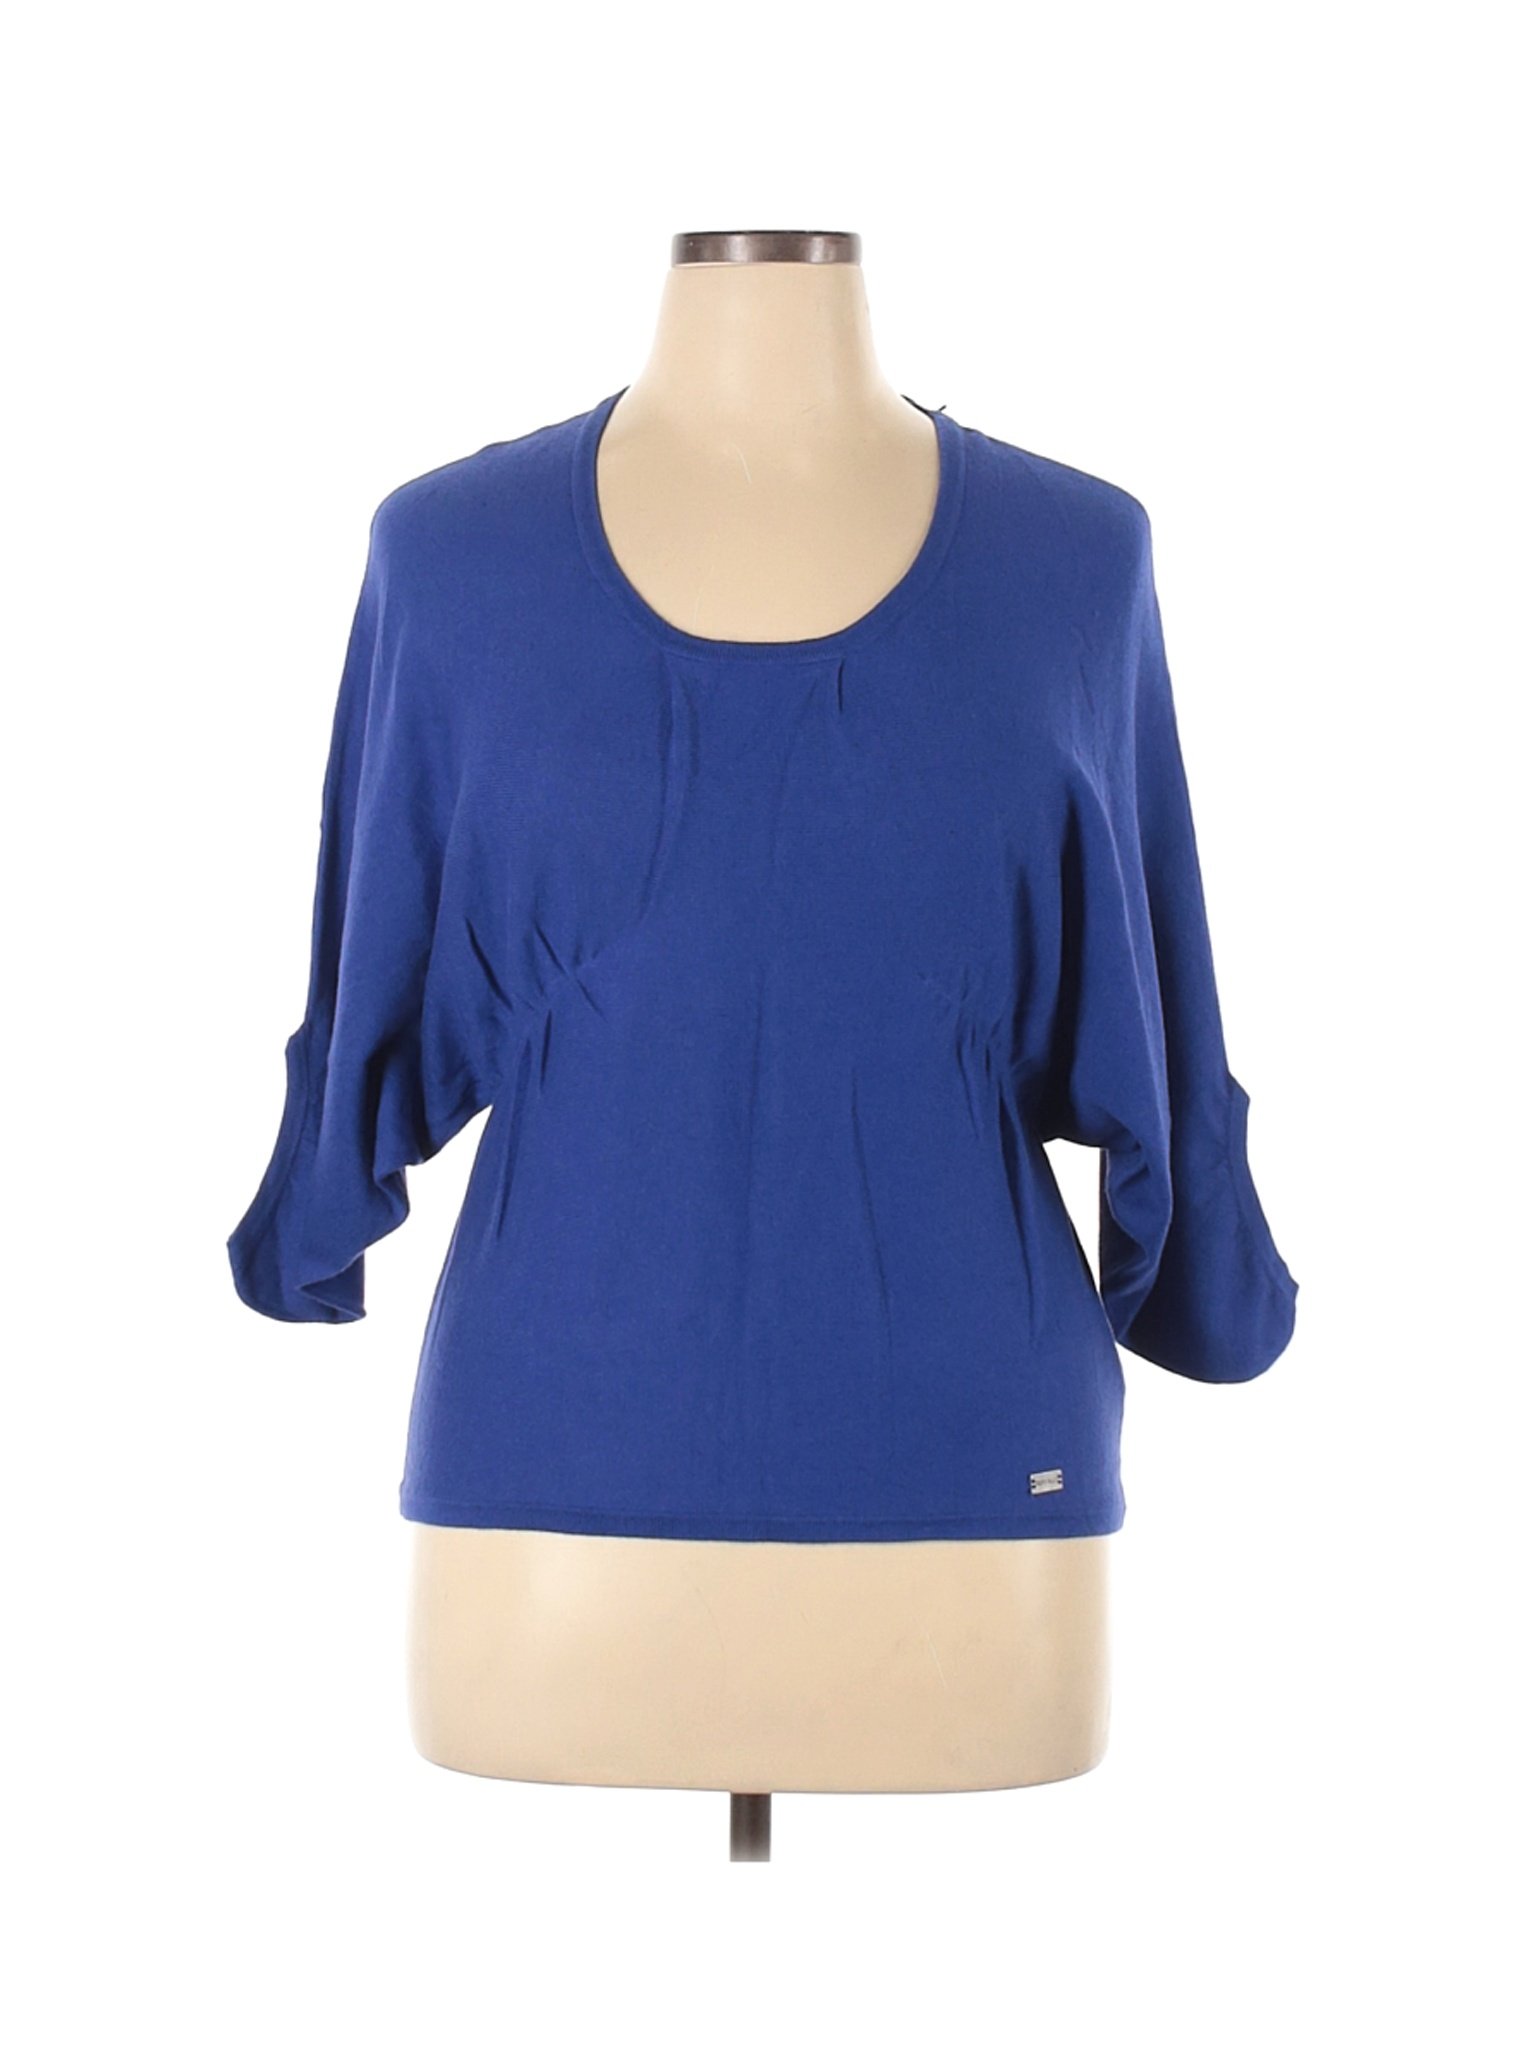 NWT Buffalo Women Blue Short Sleeve Top XL | eBay